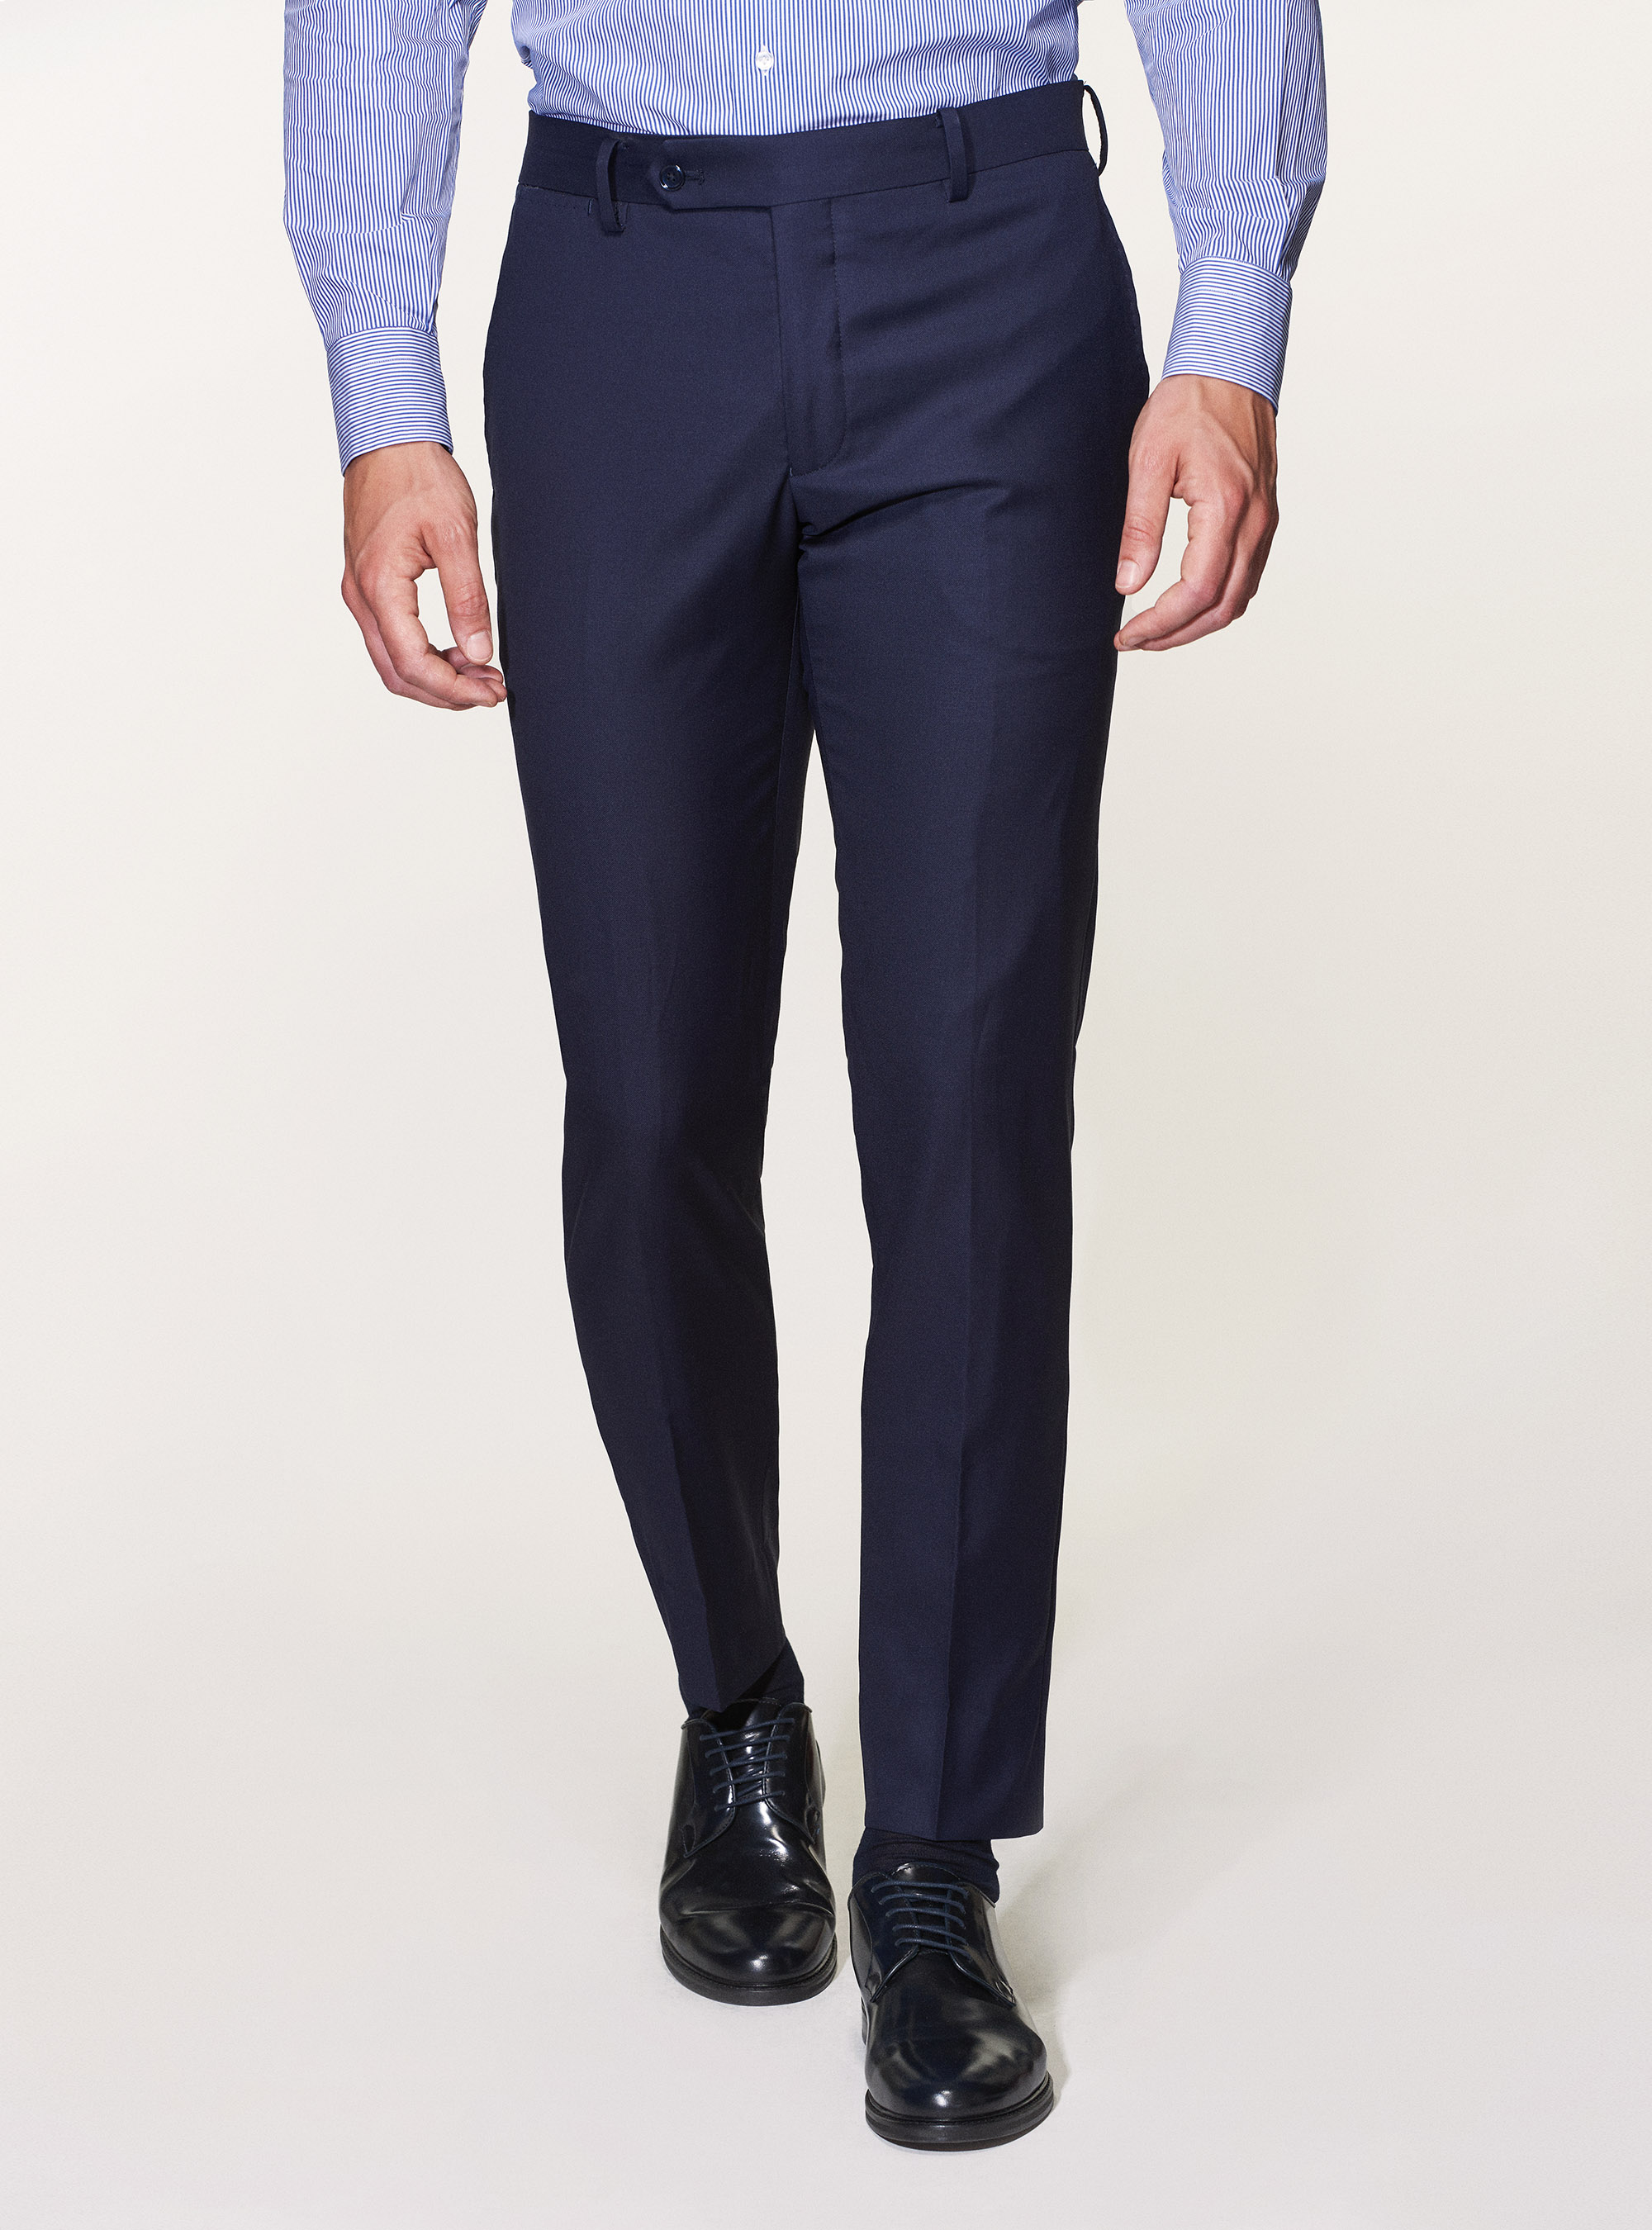 Suit trousers in pure superfine wool 110's Vitale Barberis Canonico |  GutteridgeEU | Suits Uomo